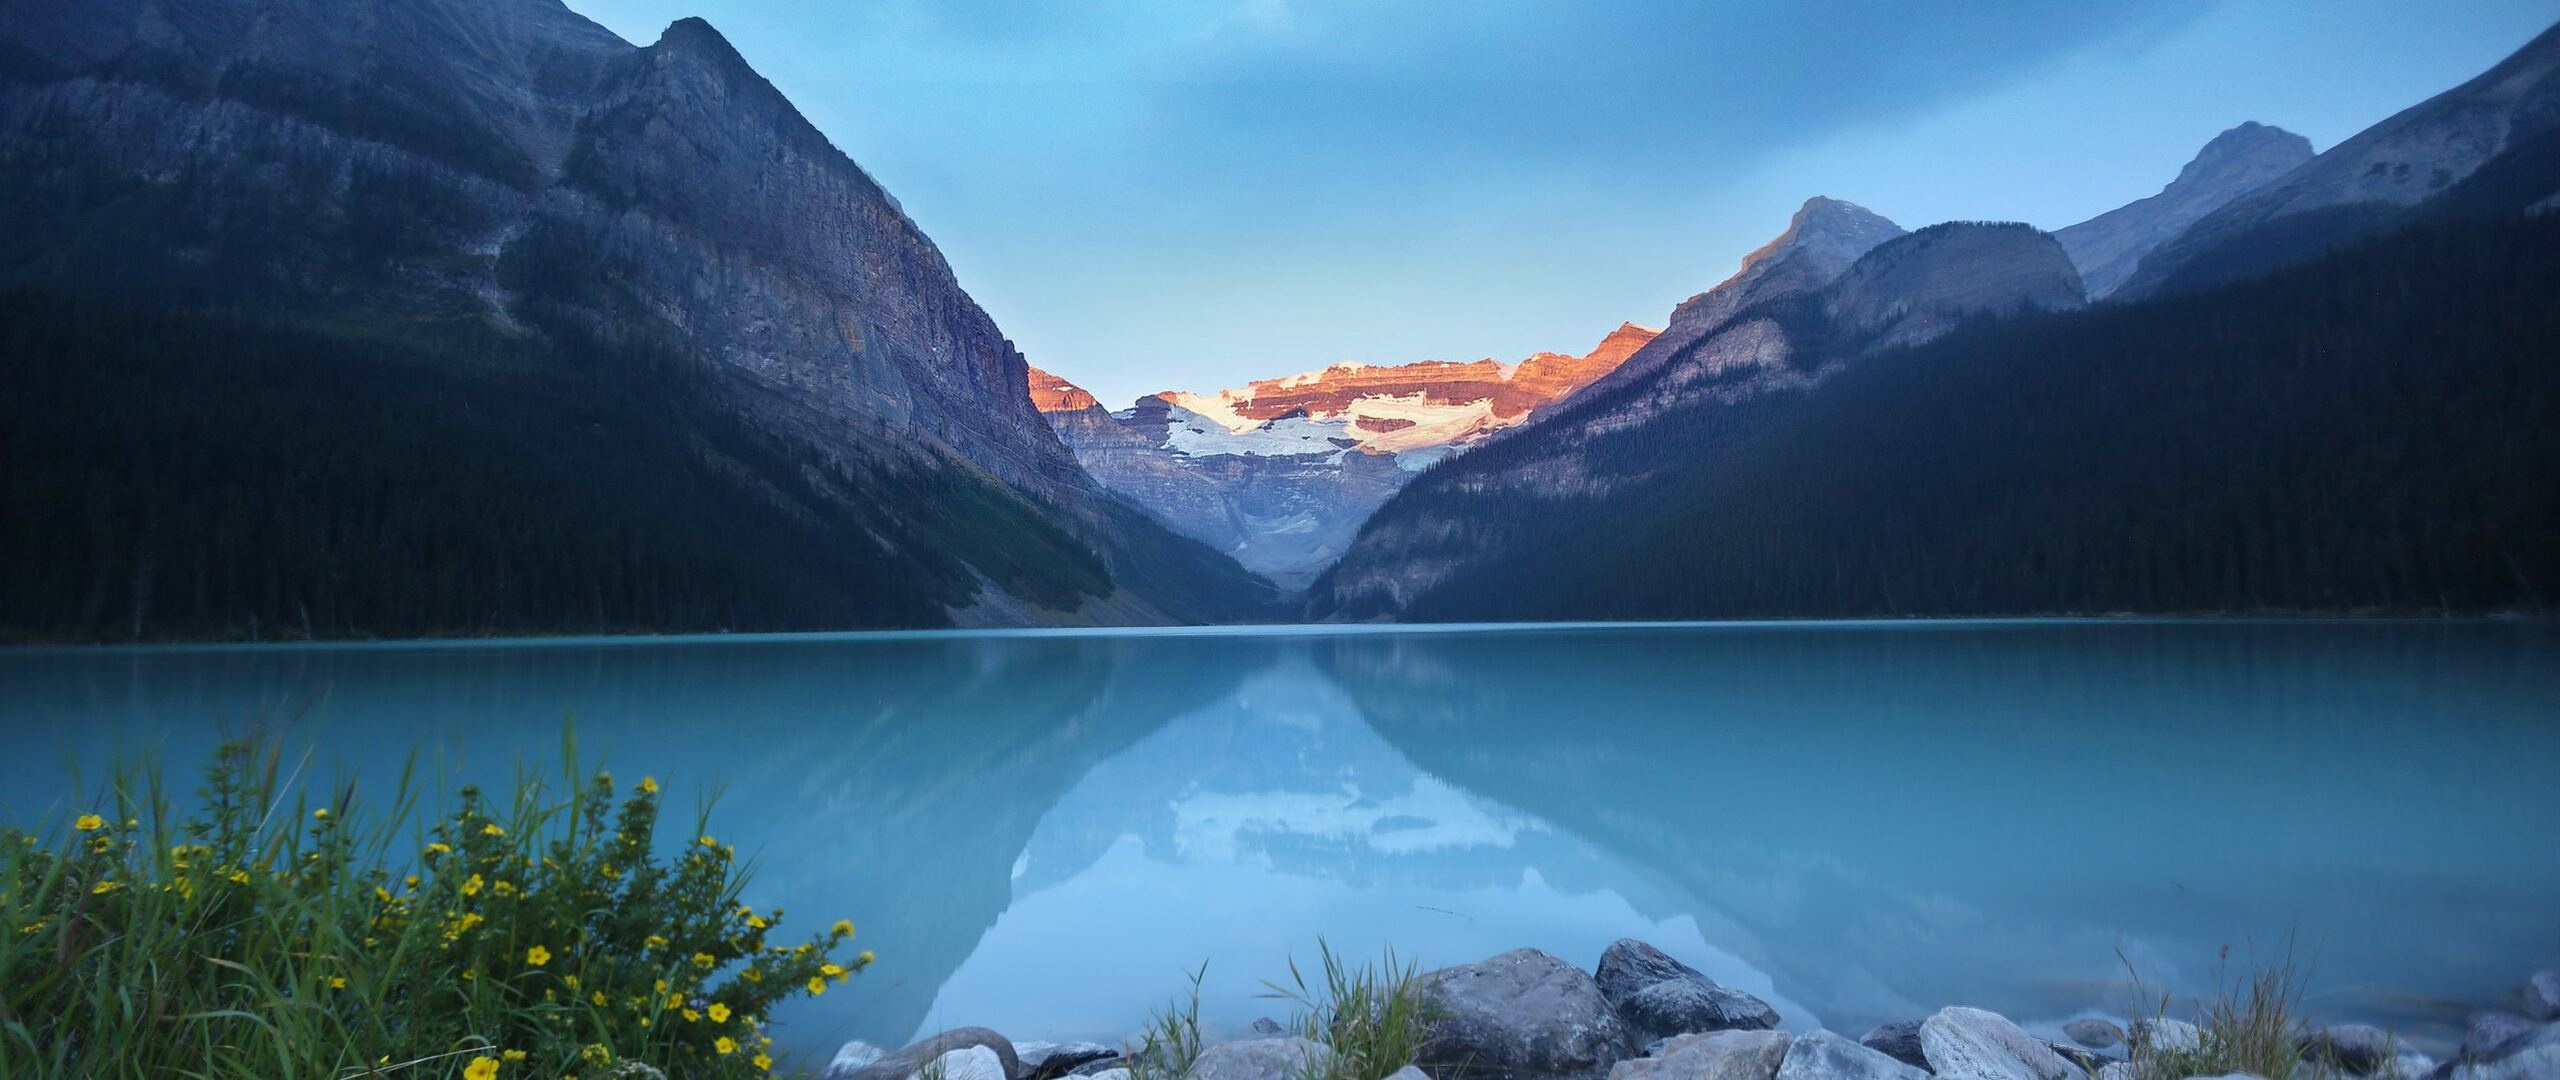 Lake Louise Canada view, 4k wallpapers, 2560x1080 Dual Screen Desktop